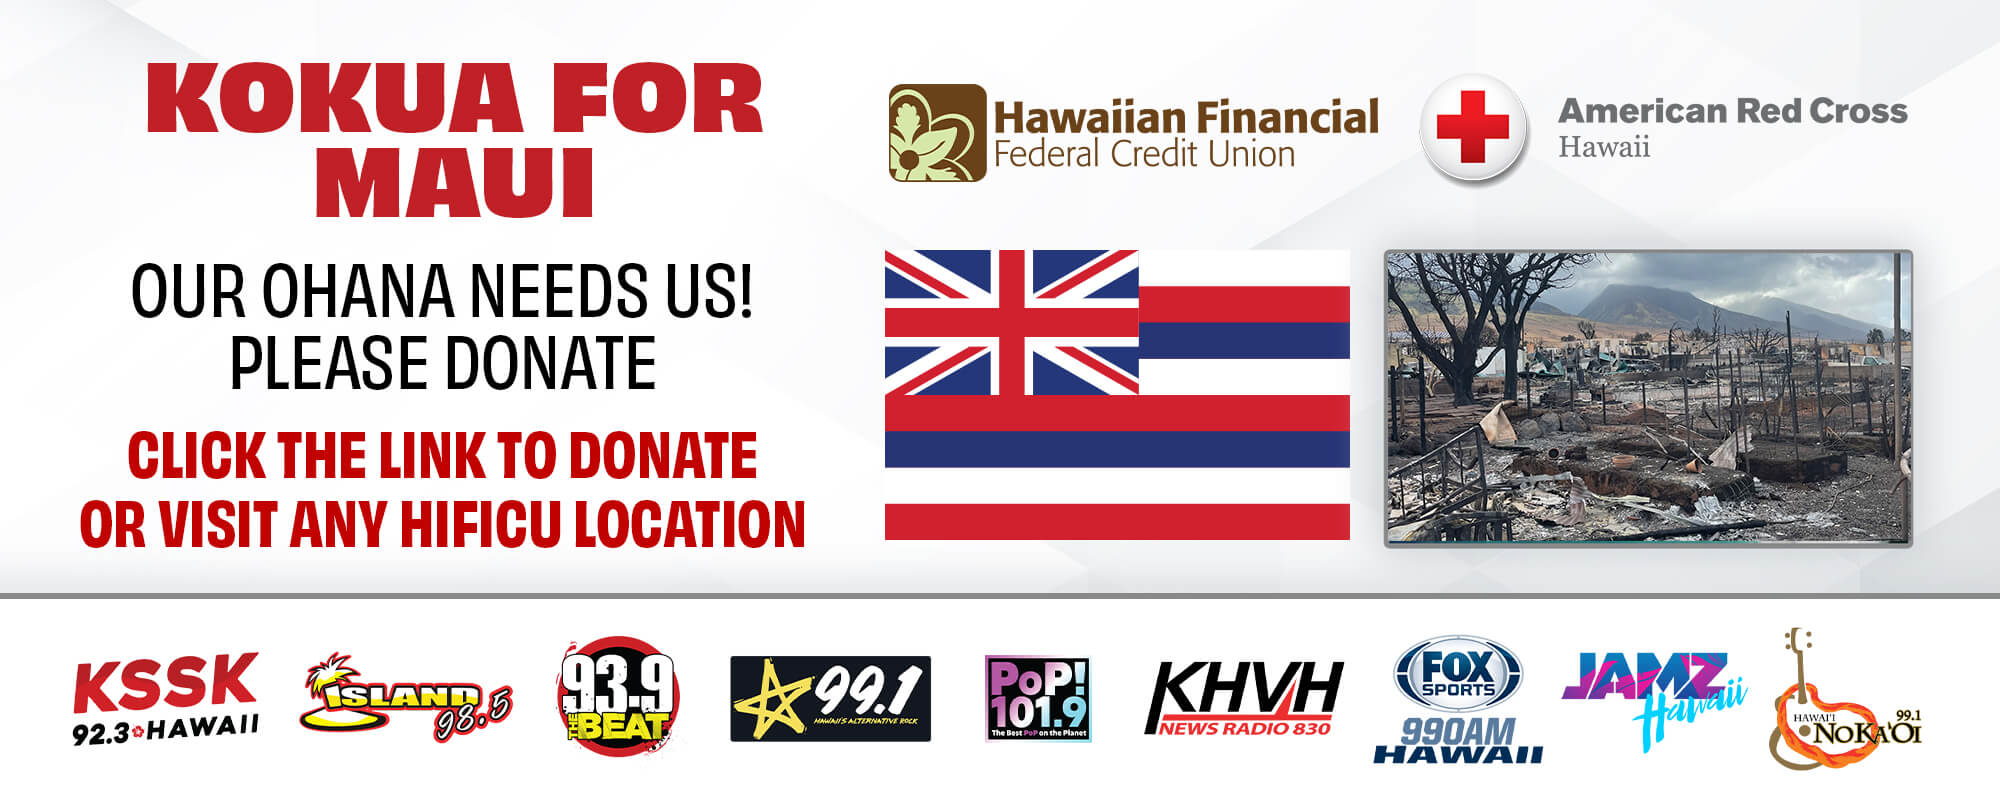 Kokua for Maui - Our ohana needs us!  Click here to donate or visit any HIFICU location.